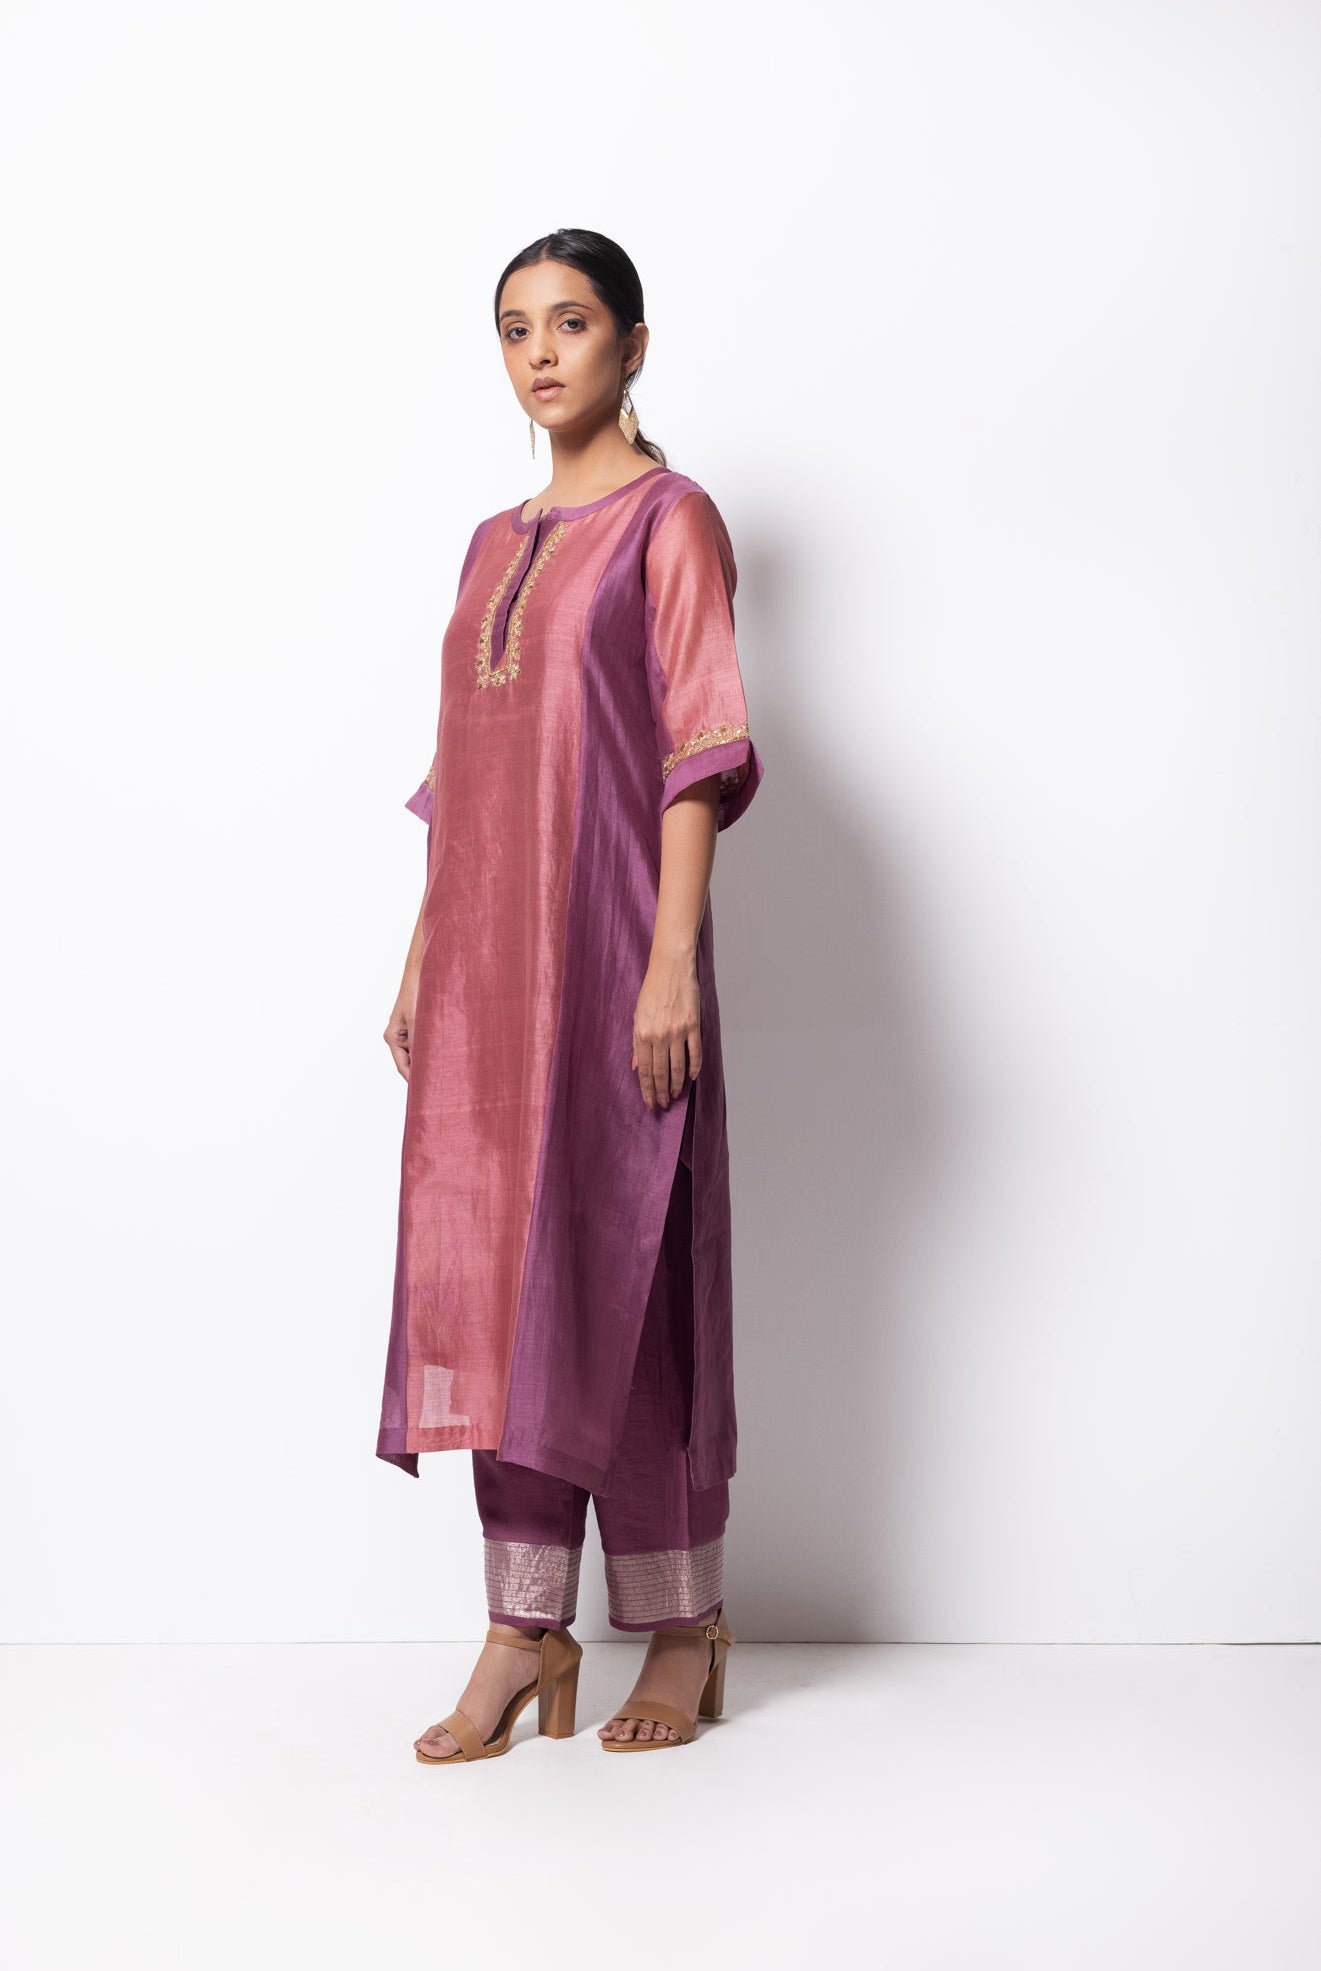 Plum Pink Chanderi Silk Panelled Kurta Set with Dupatta - CiceroniBhavik Shah